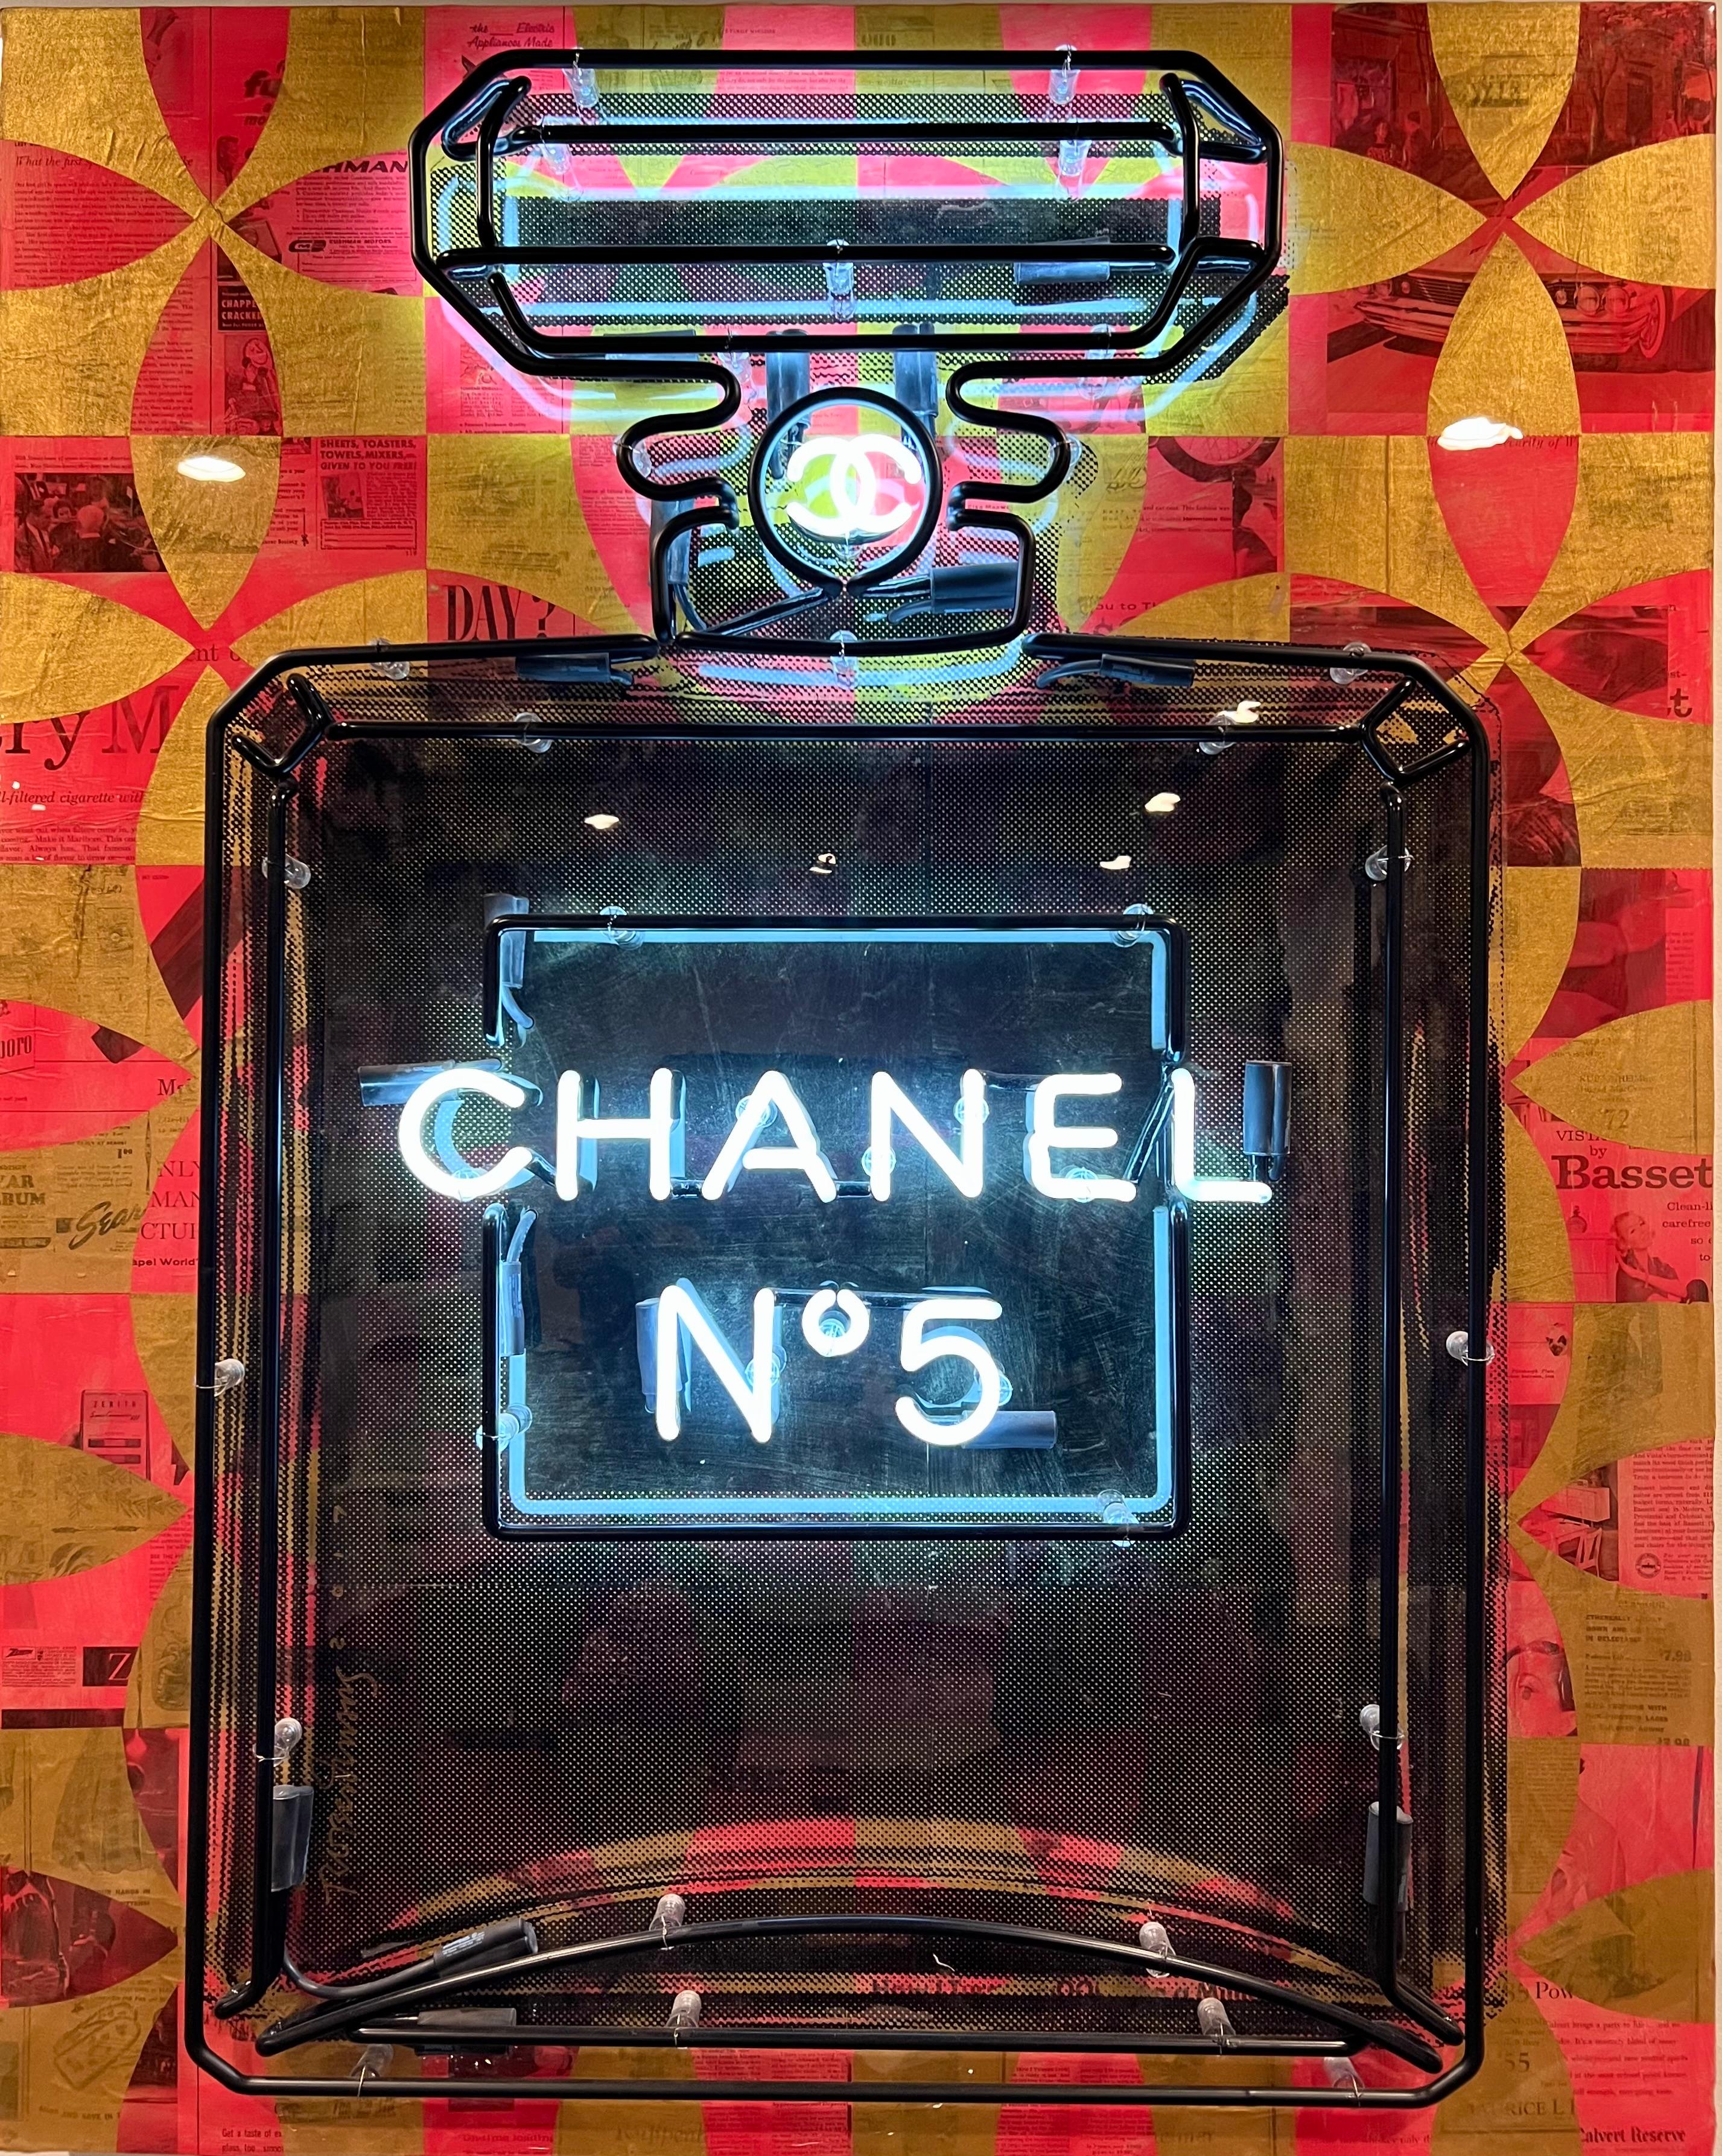 Chanel No. 5 - Mixed Media Art by Robert Mars